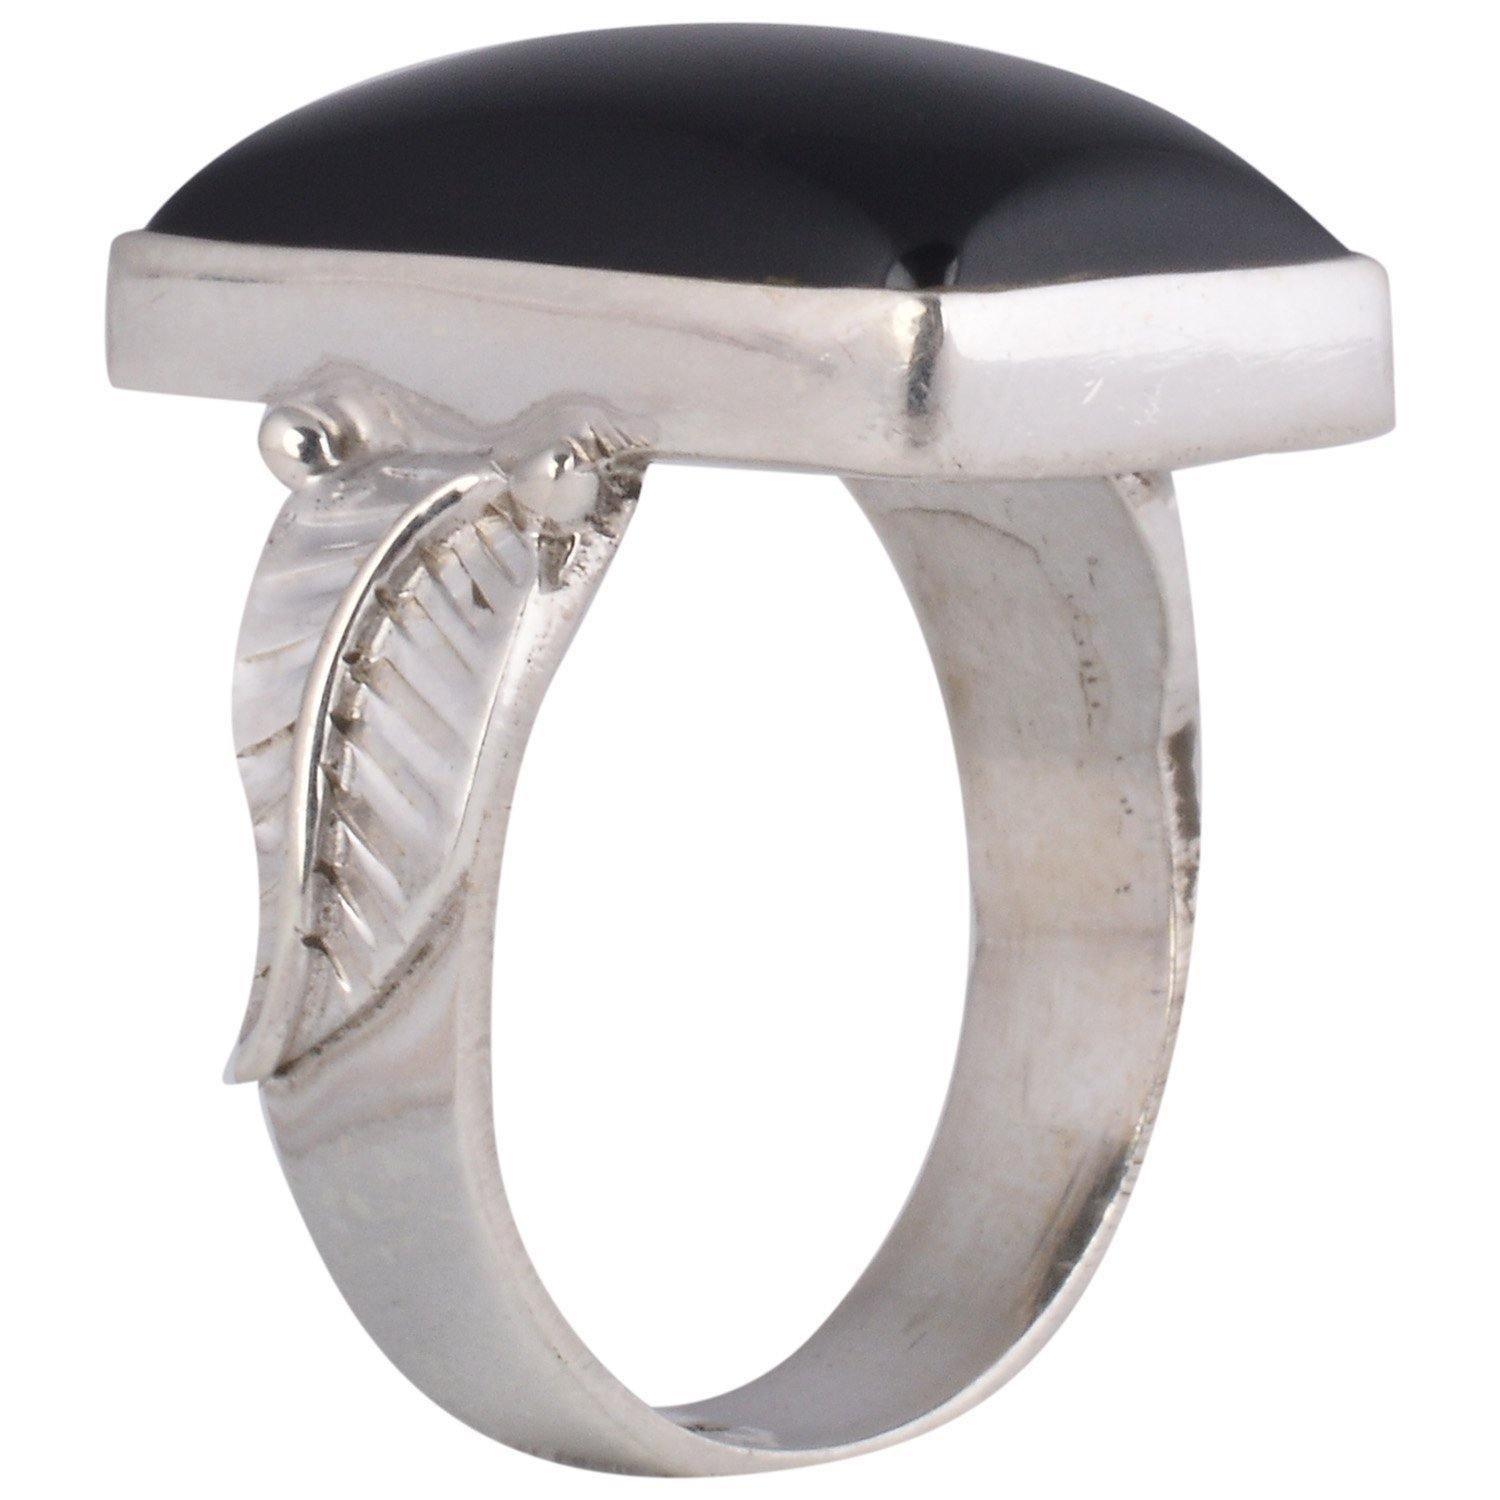 Amazon.com: Veracity Jewelry 925 Sterling Silver Black Onyx Rings for Women  - Black Onyx Handmade Solid Sterling Silver Women's Ring- Delicate Gemstone  Designer Trendy Midi Fashion Black Onyx Rings - VSR-6 : Handmade Products